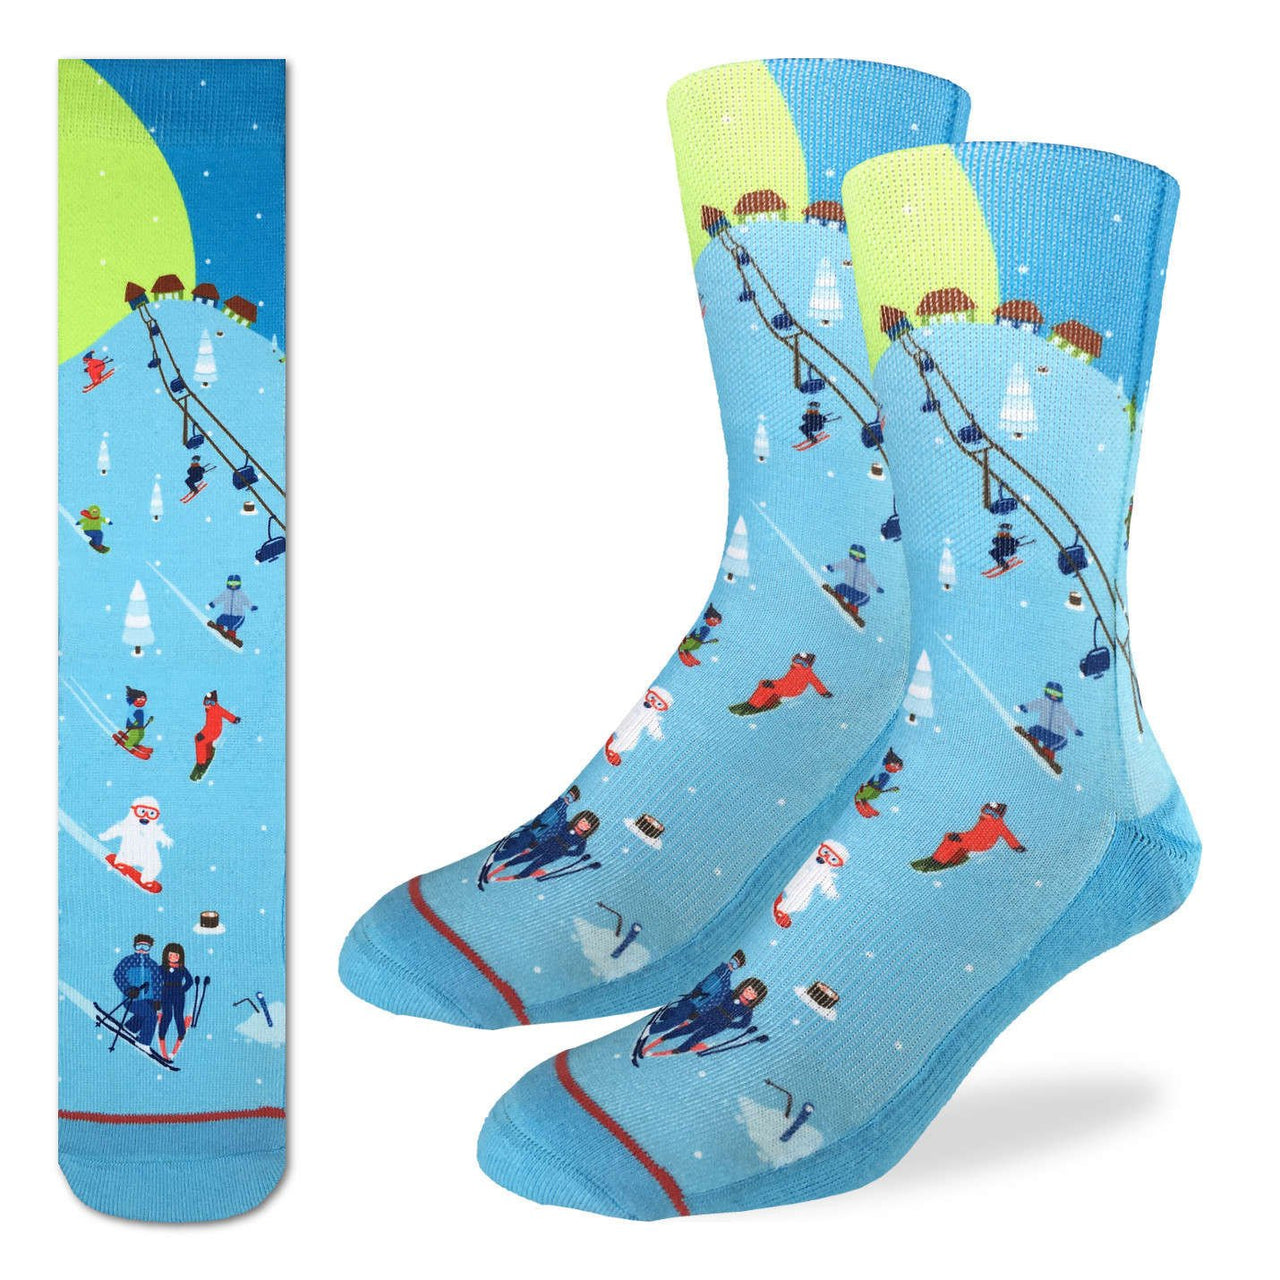 Men's Socks - Skiing